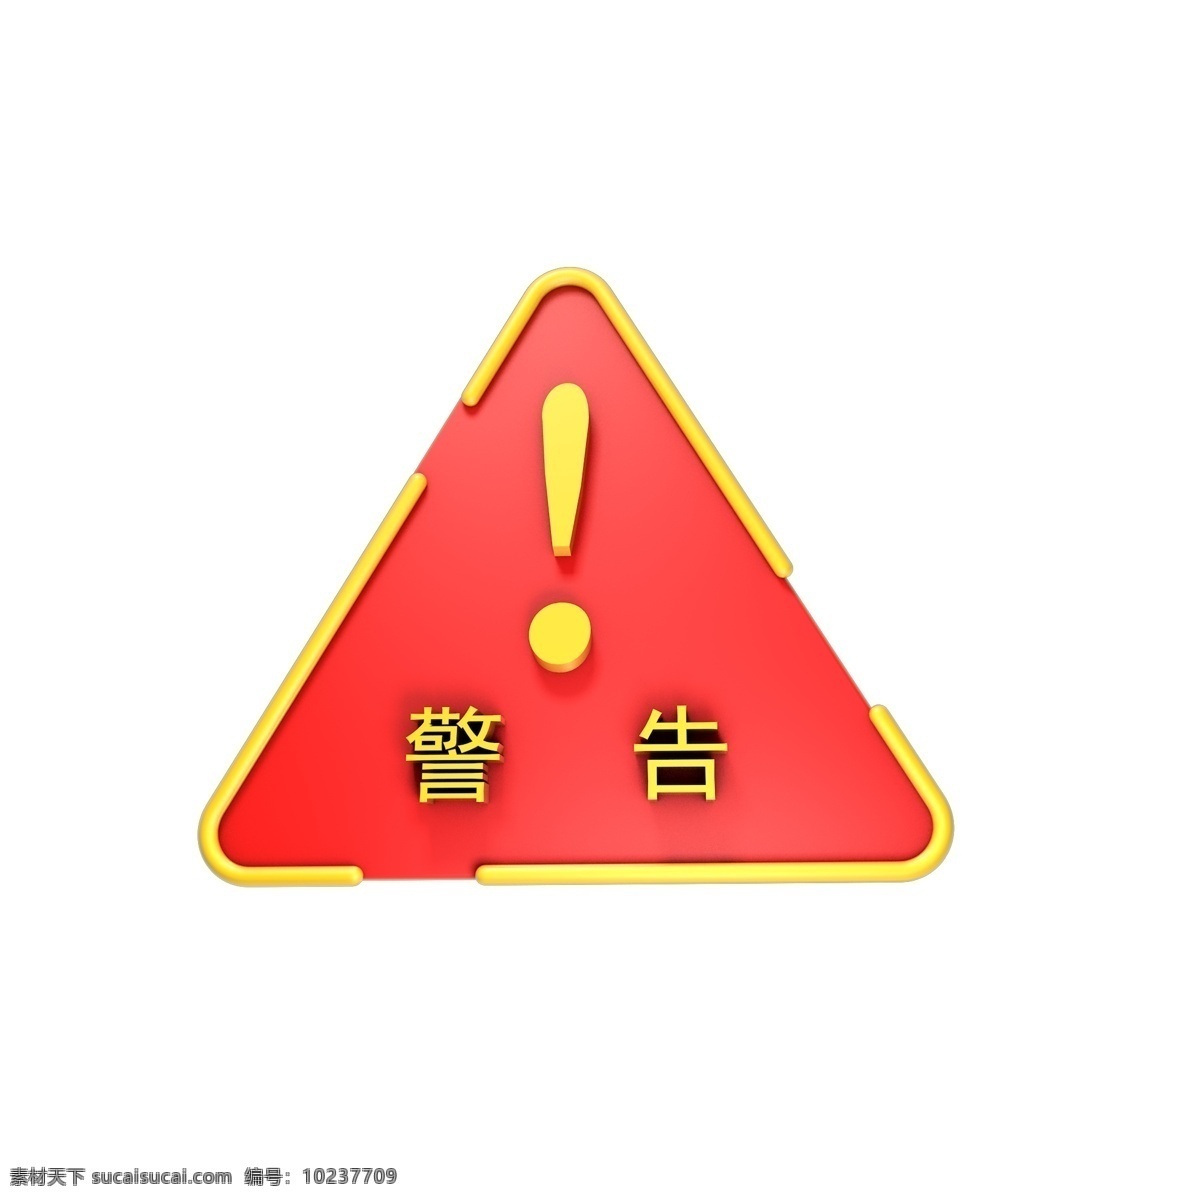 c4d 立体 红 黄 警告 标识 牌 警告类标识 创意标点 装饰符号 叹号 惊叹号 黄色叹号 创意 感叹号